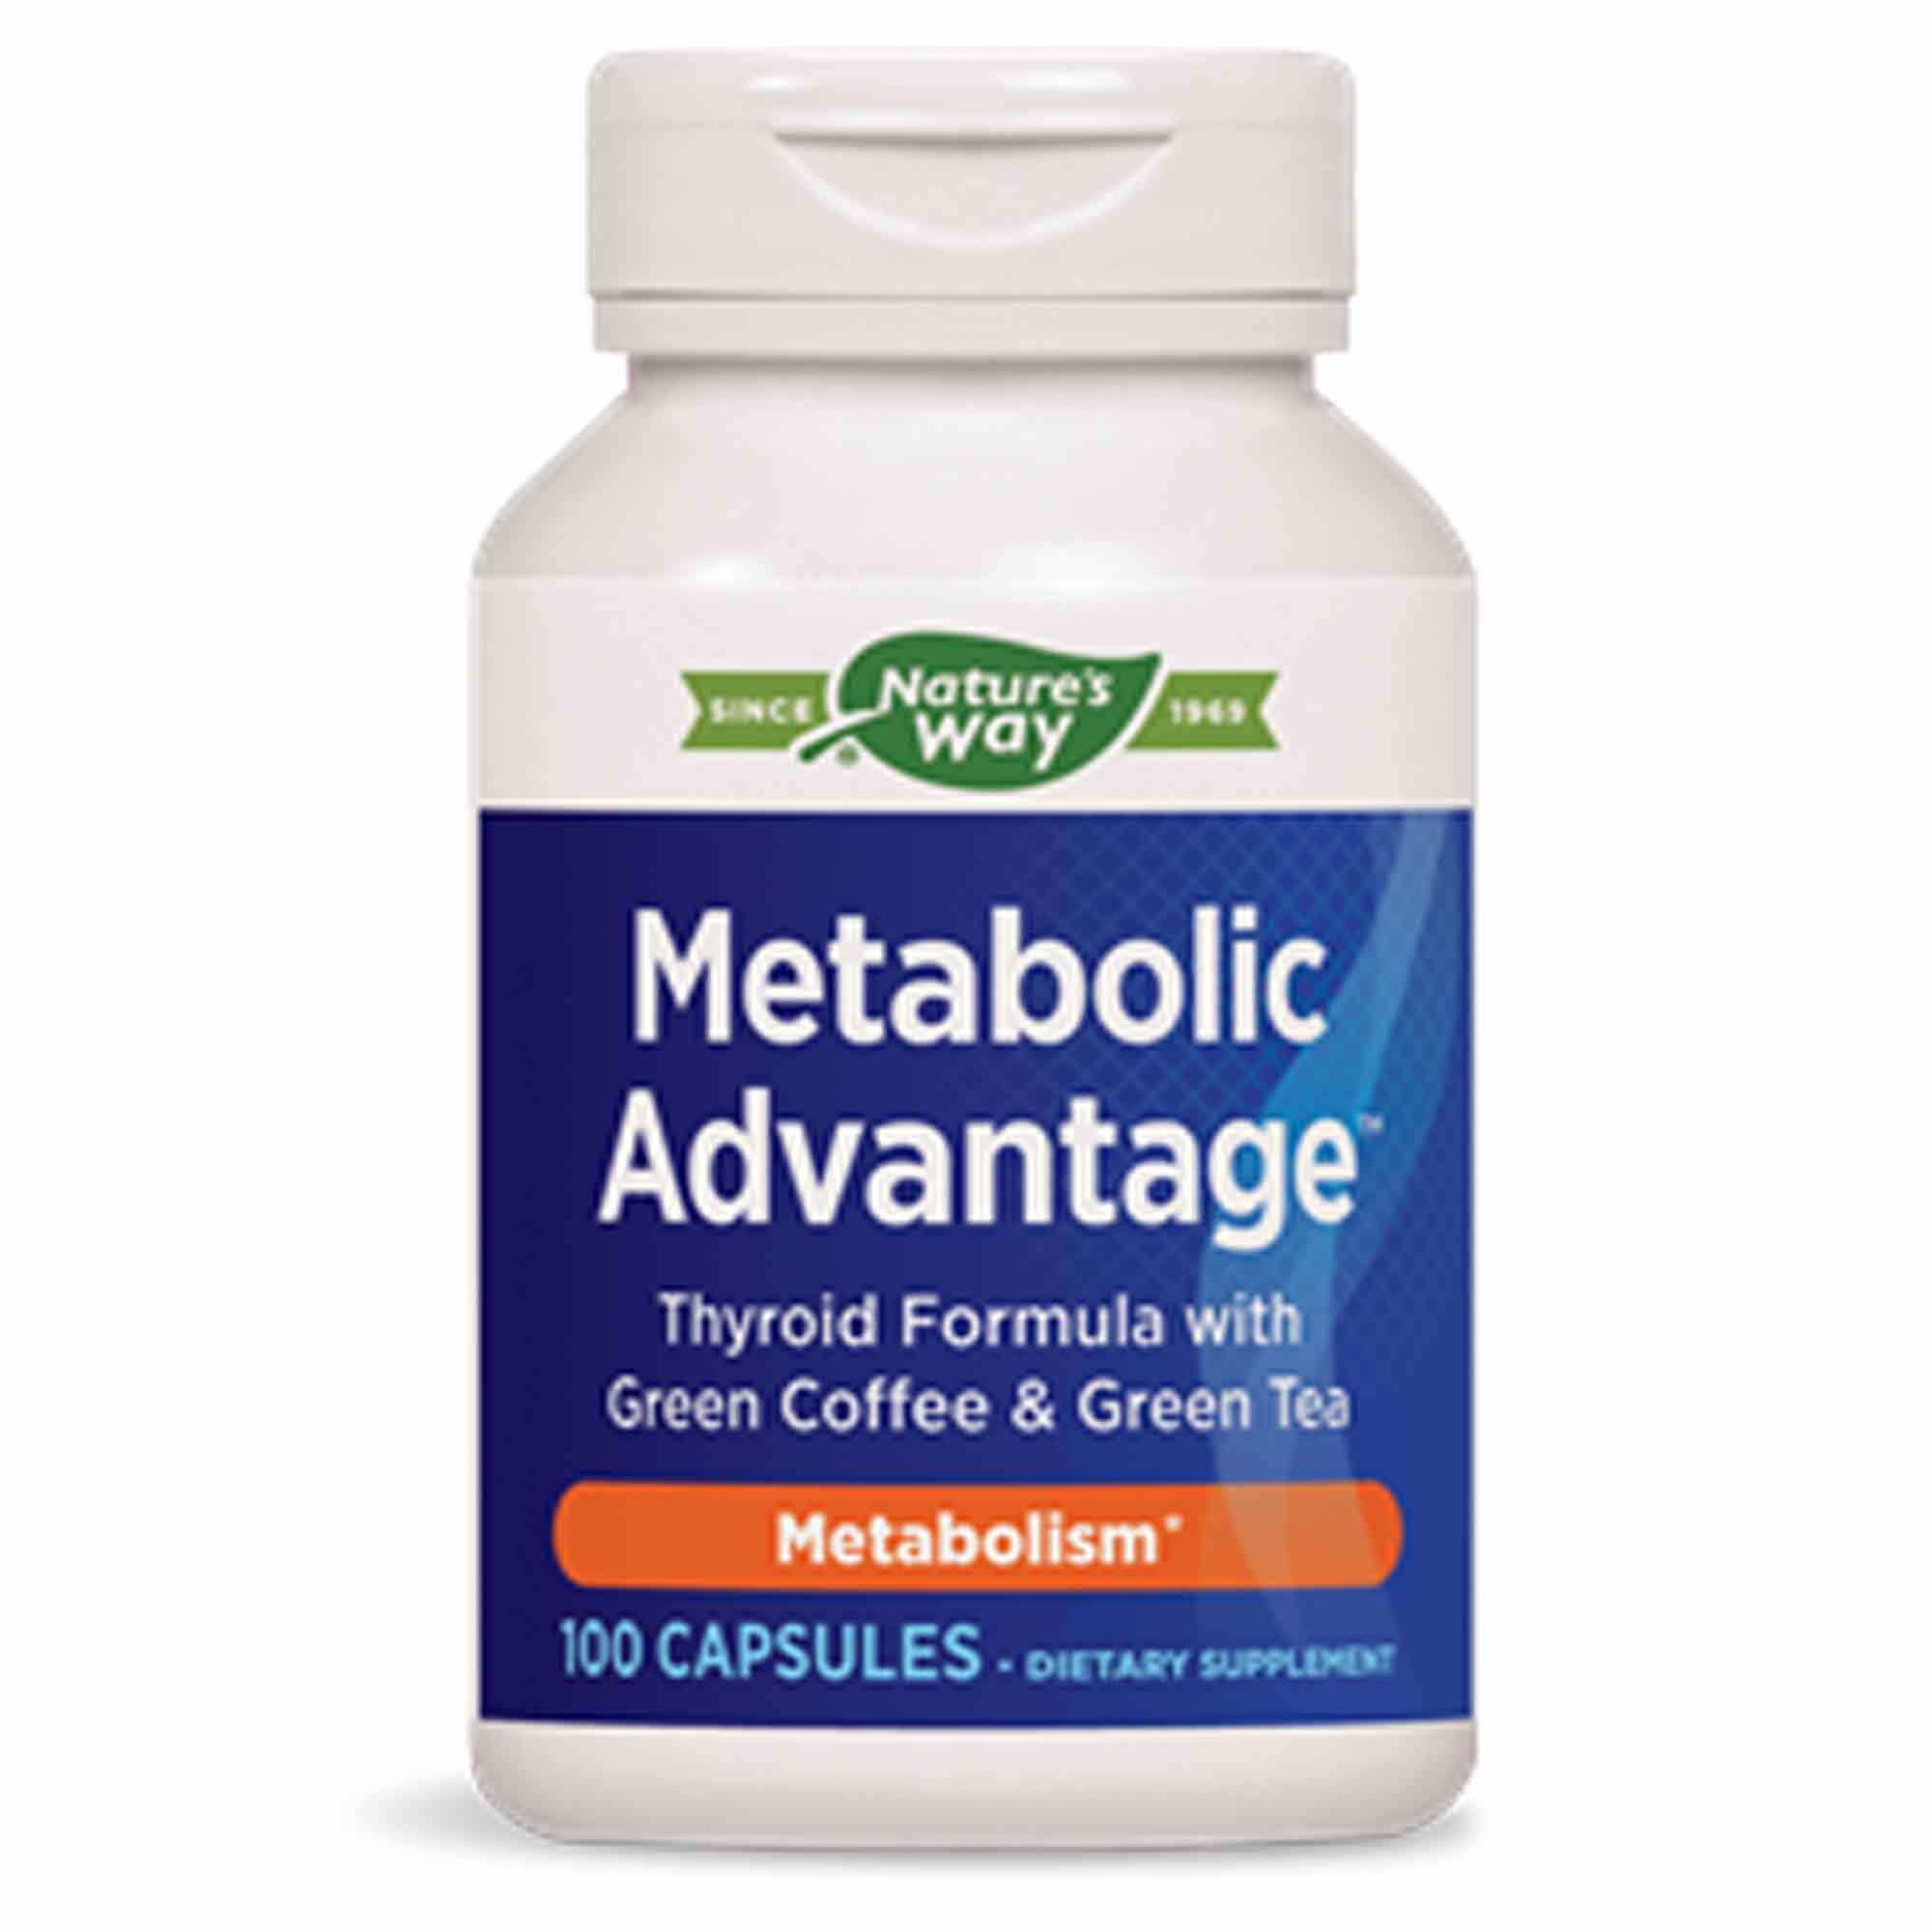 Metabolic health formulas